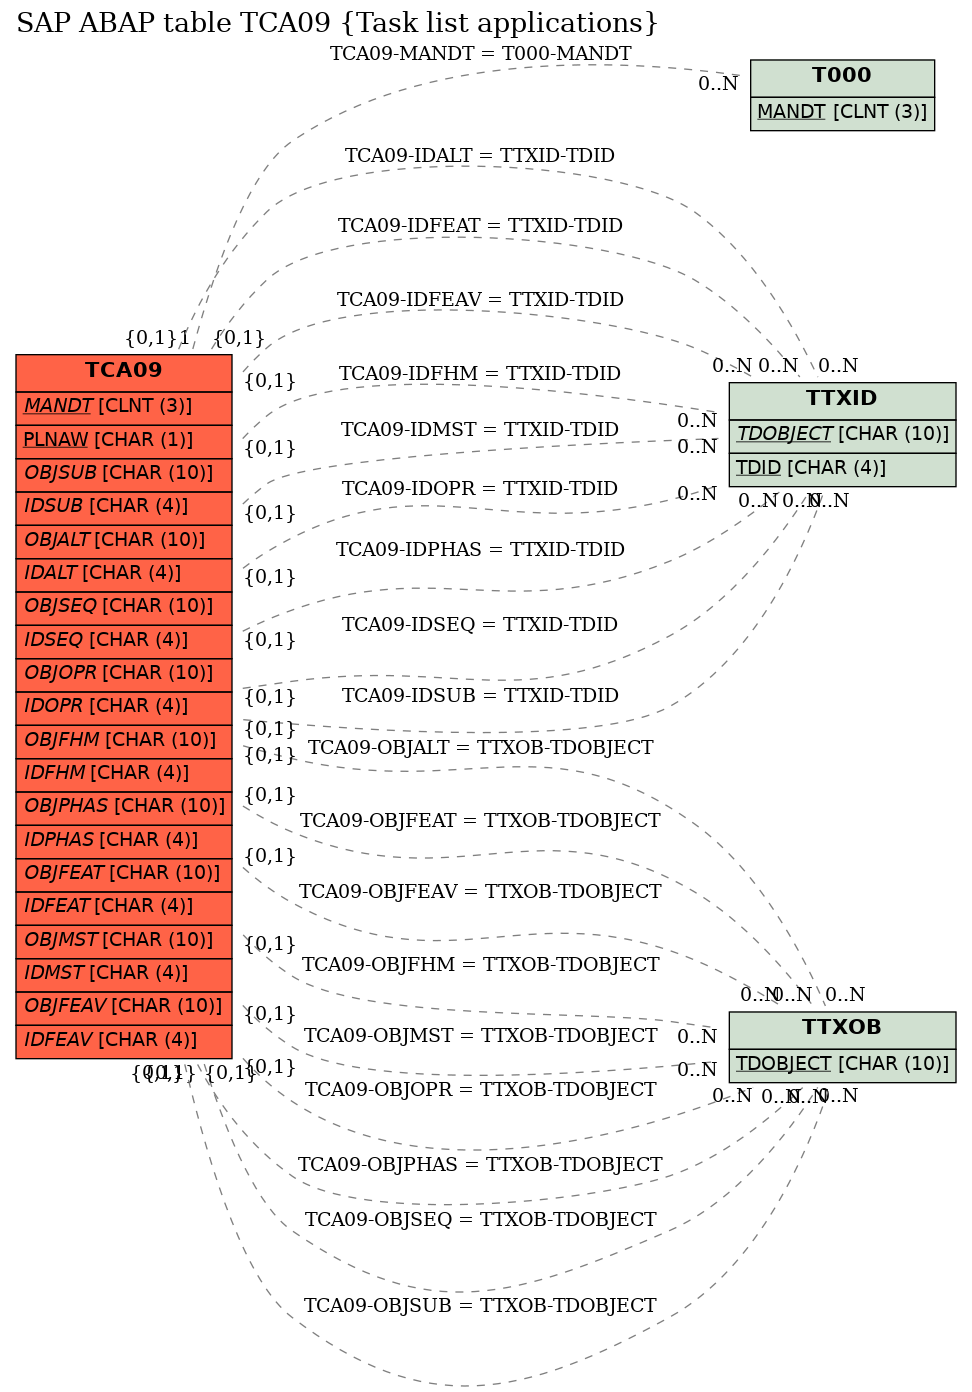 E-R Diagram for table TCA09 (Task list applications)